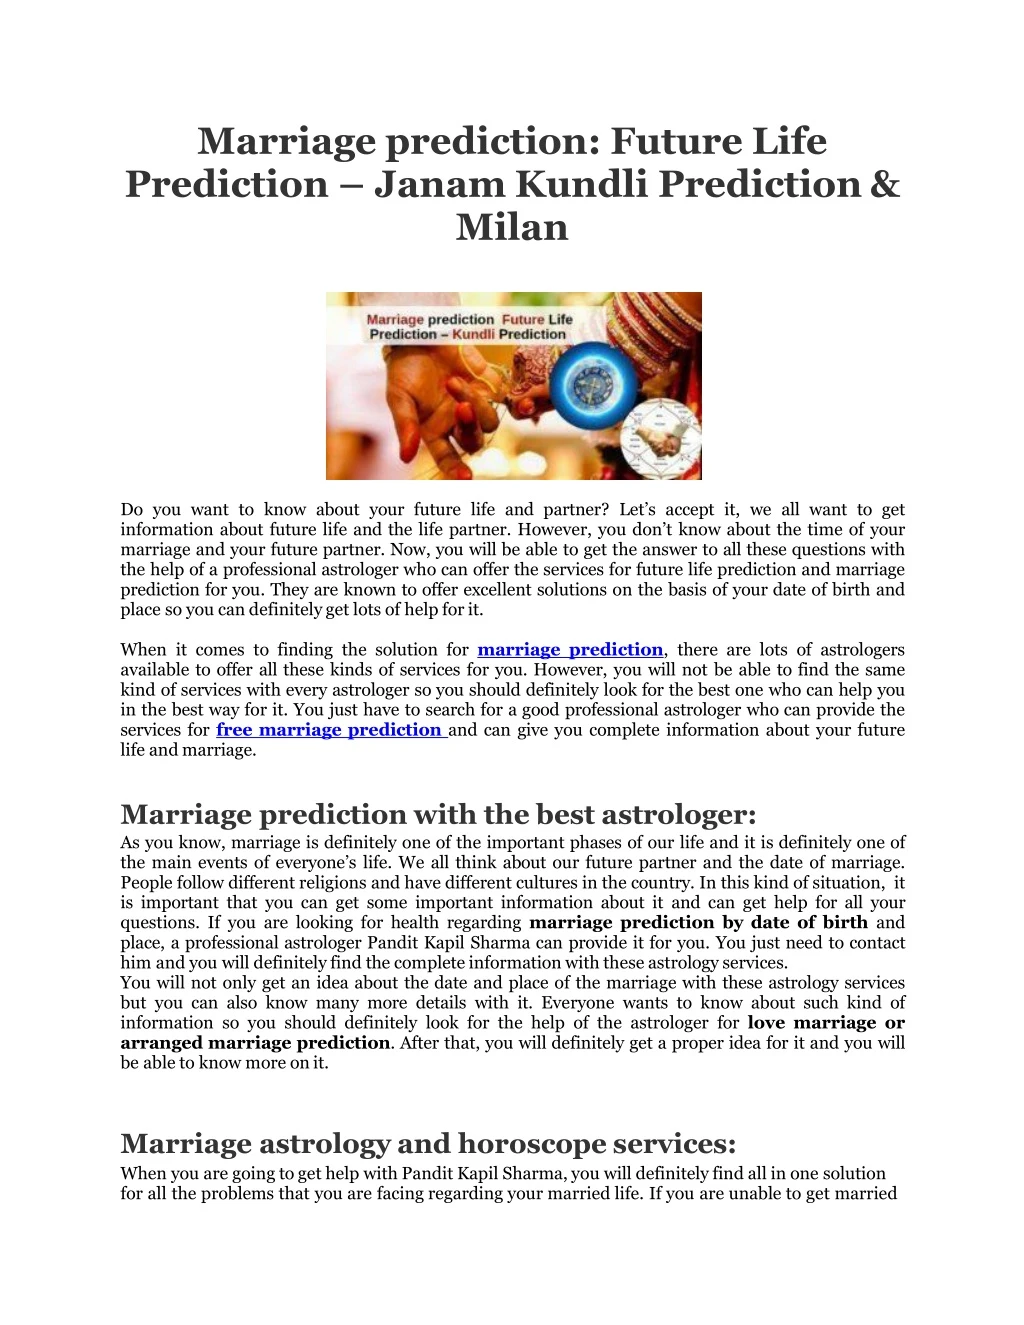 marriage prediction future life prediction janam kundli prediction milan